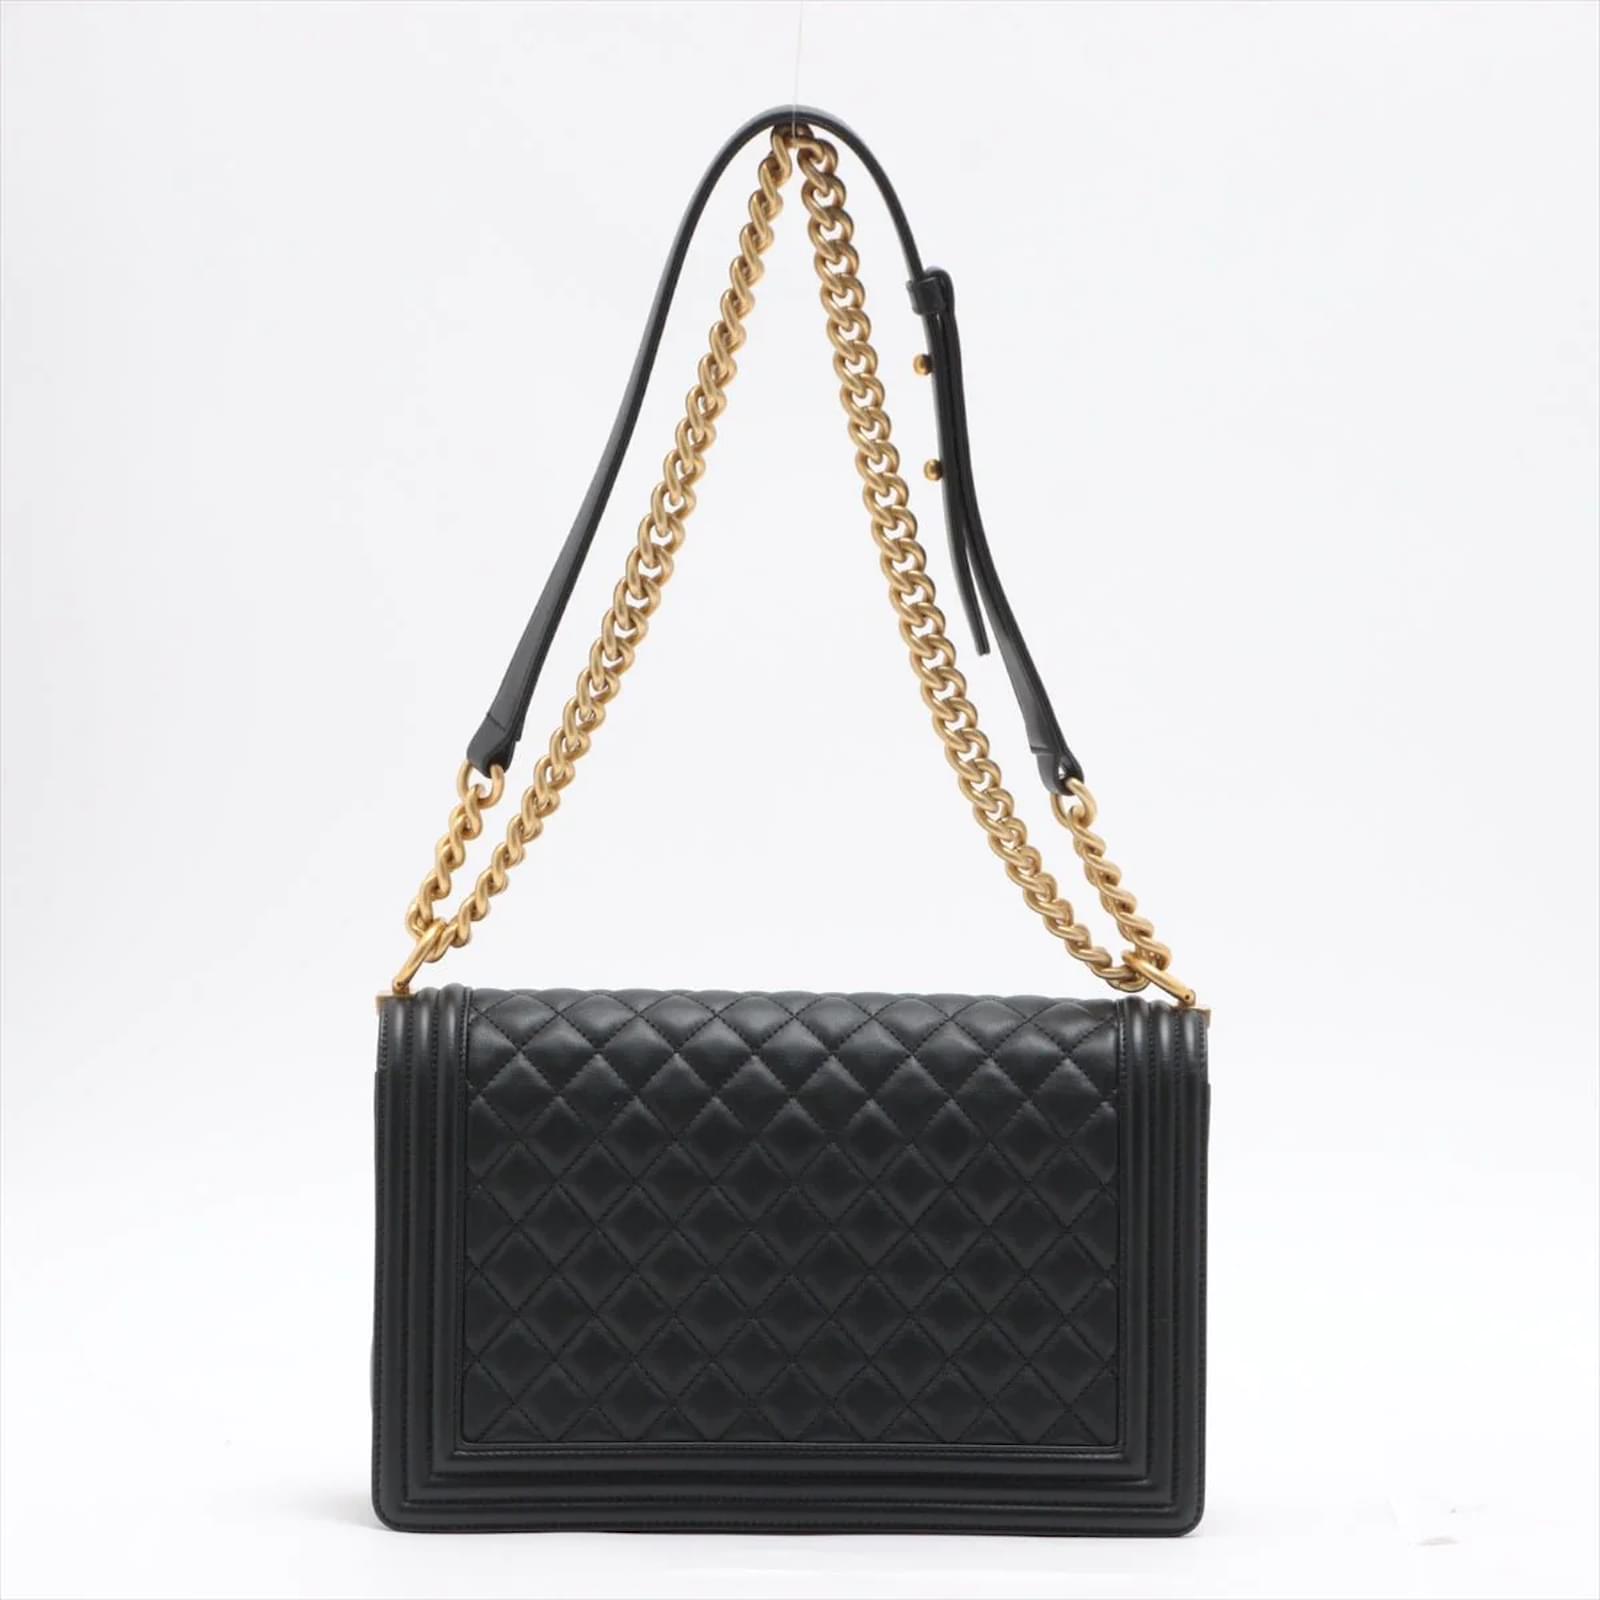 Chanel Chanel Black Ostrich Leather Shoulder bag purse gold chain CC ...